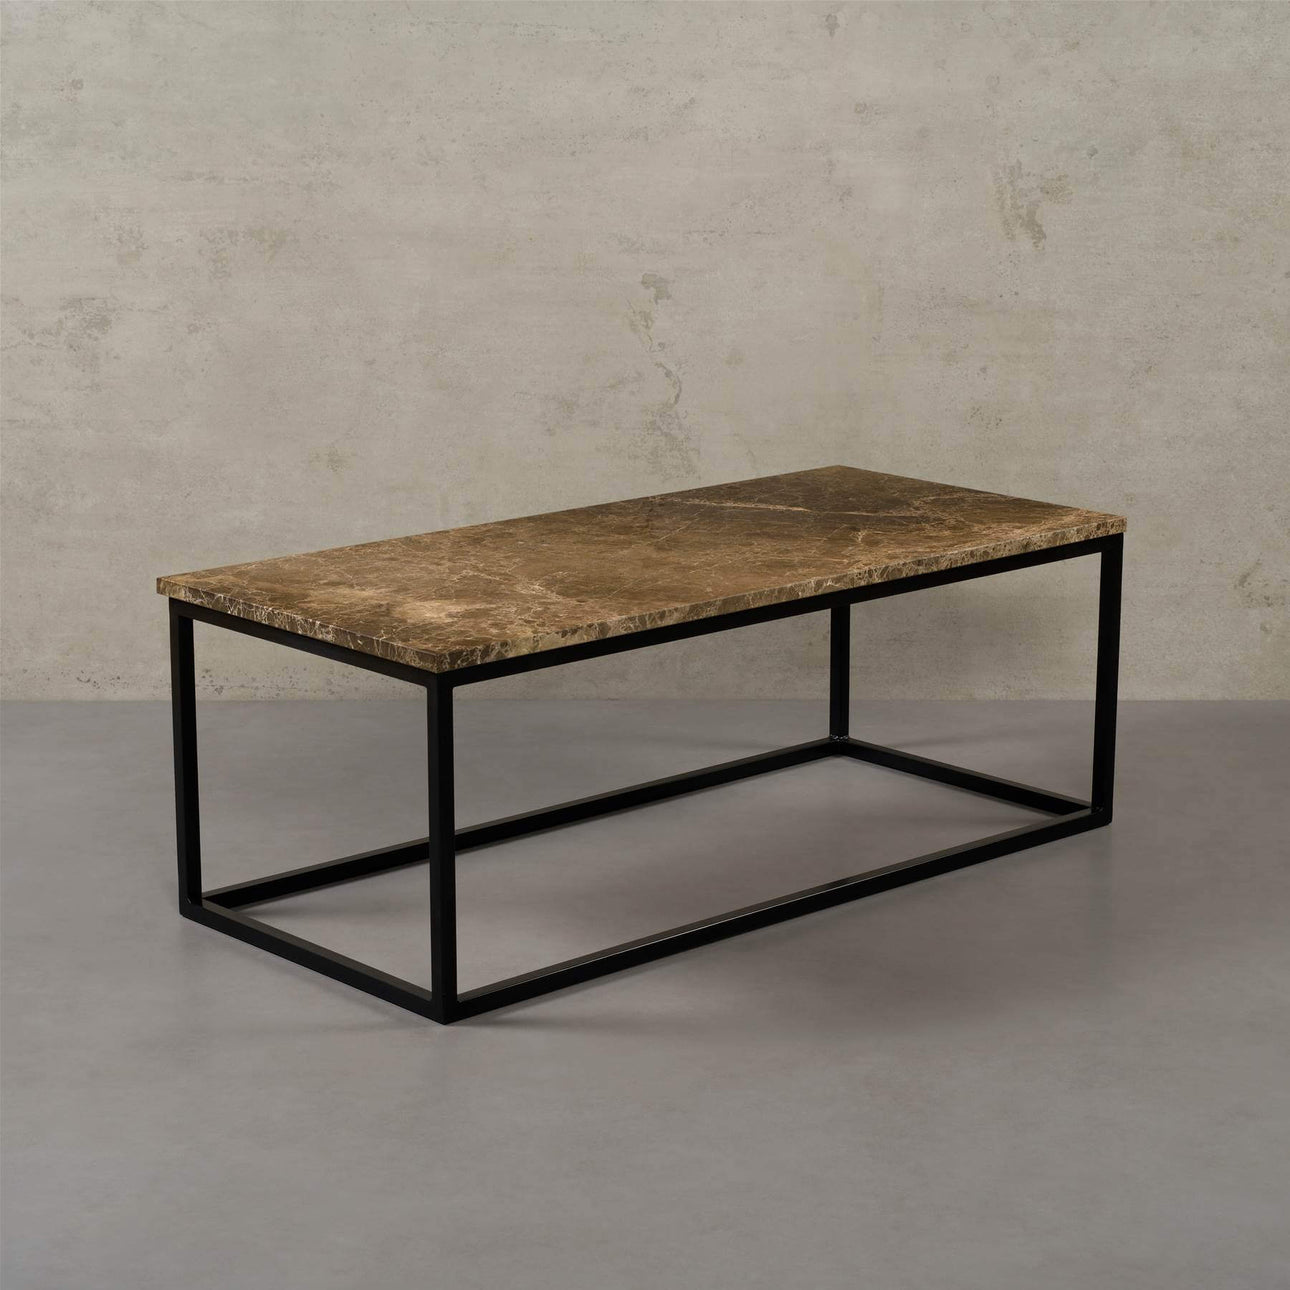 Gothenburg marble coffee table